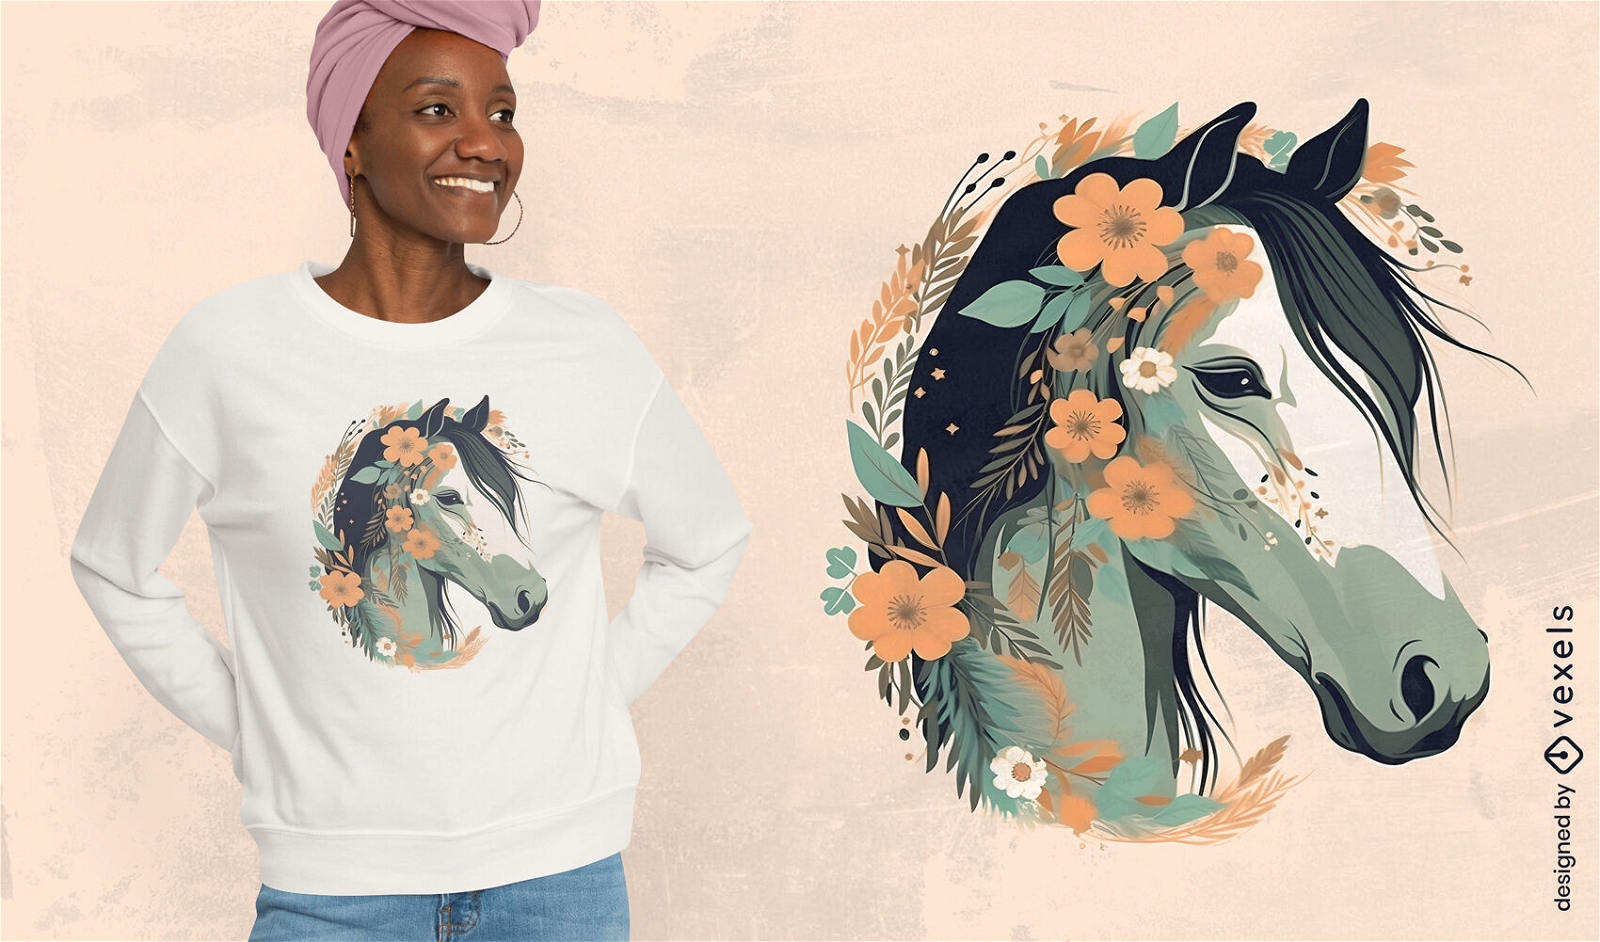 Dise?o de camiseta de caballo con flores y hojas.